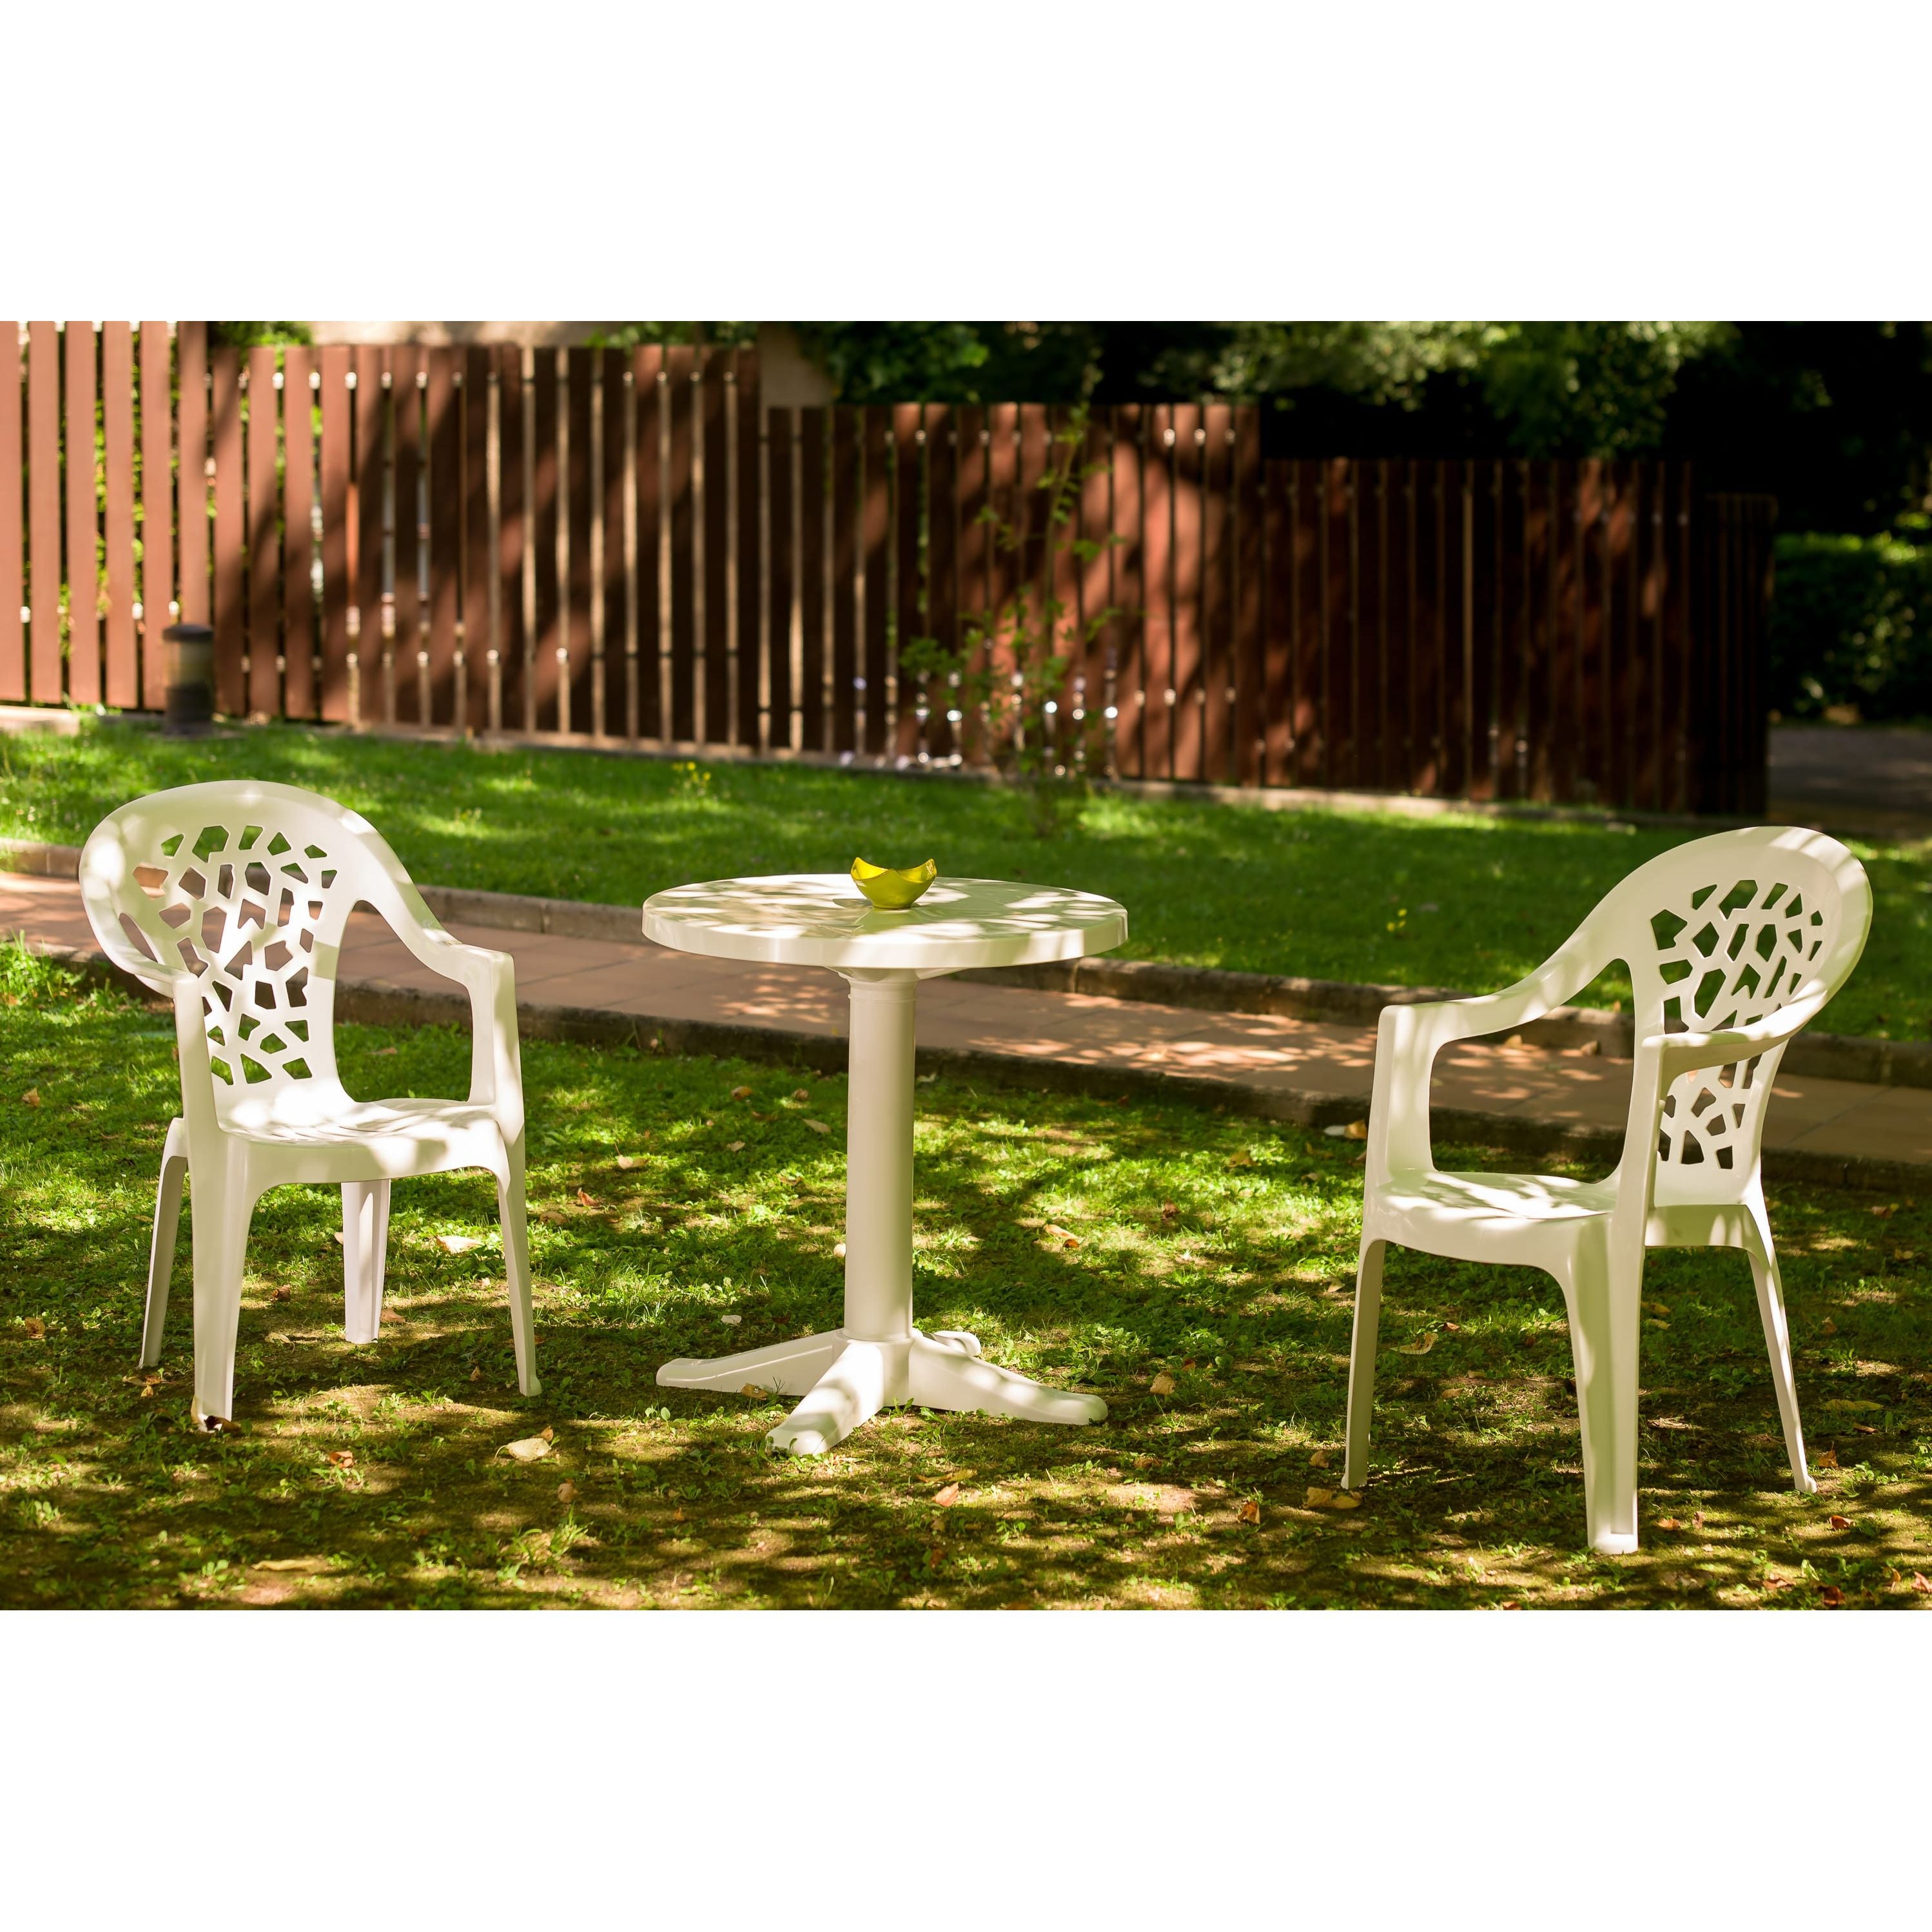 Garbar esculapi square outdoor table 70x70 white